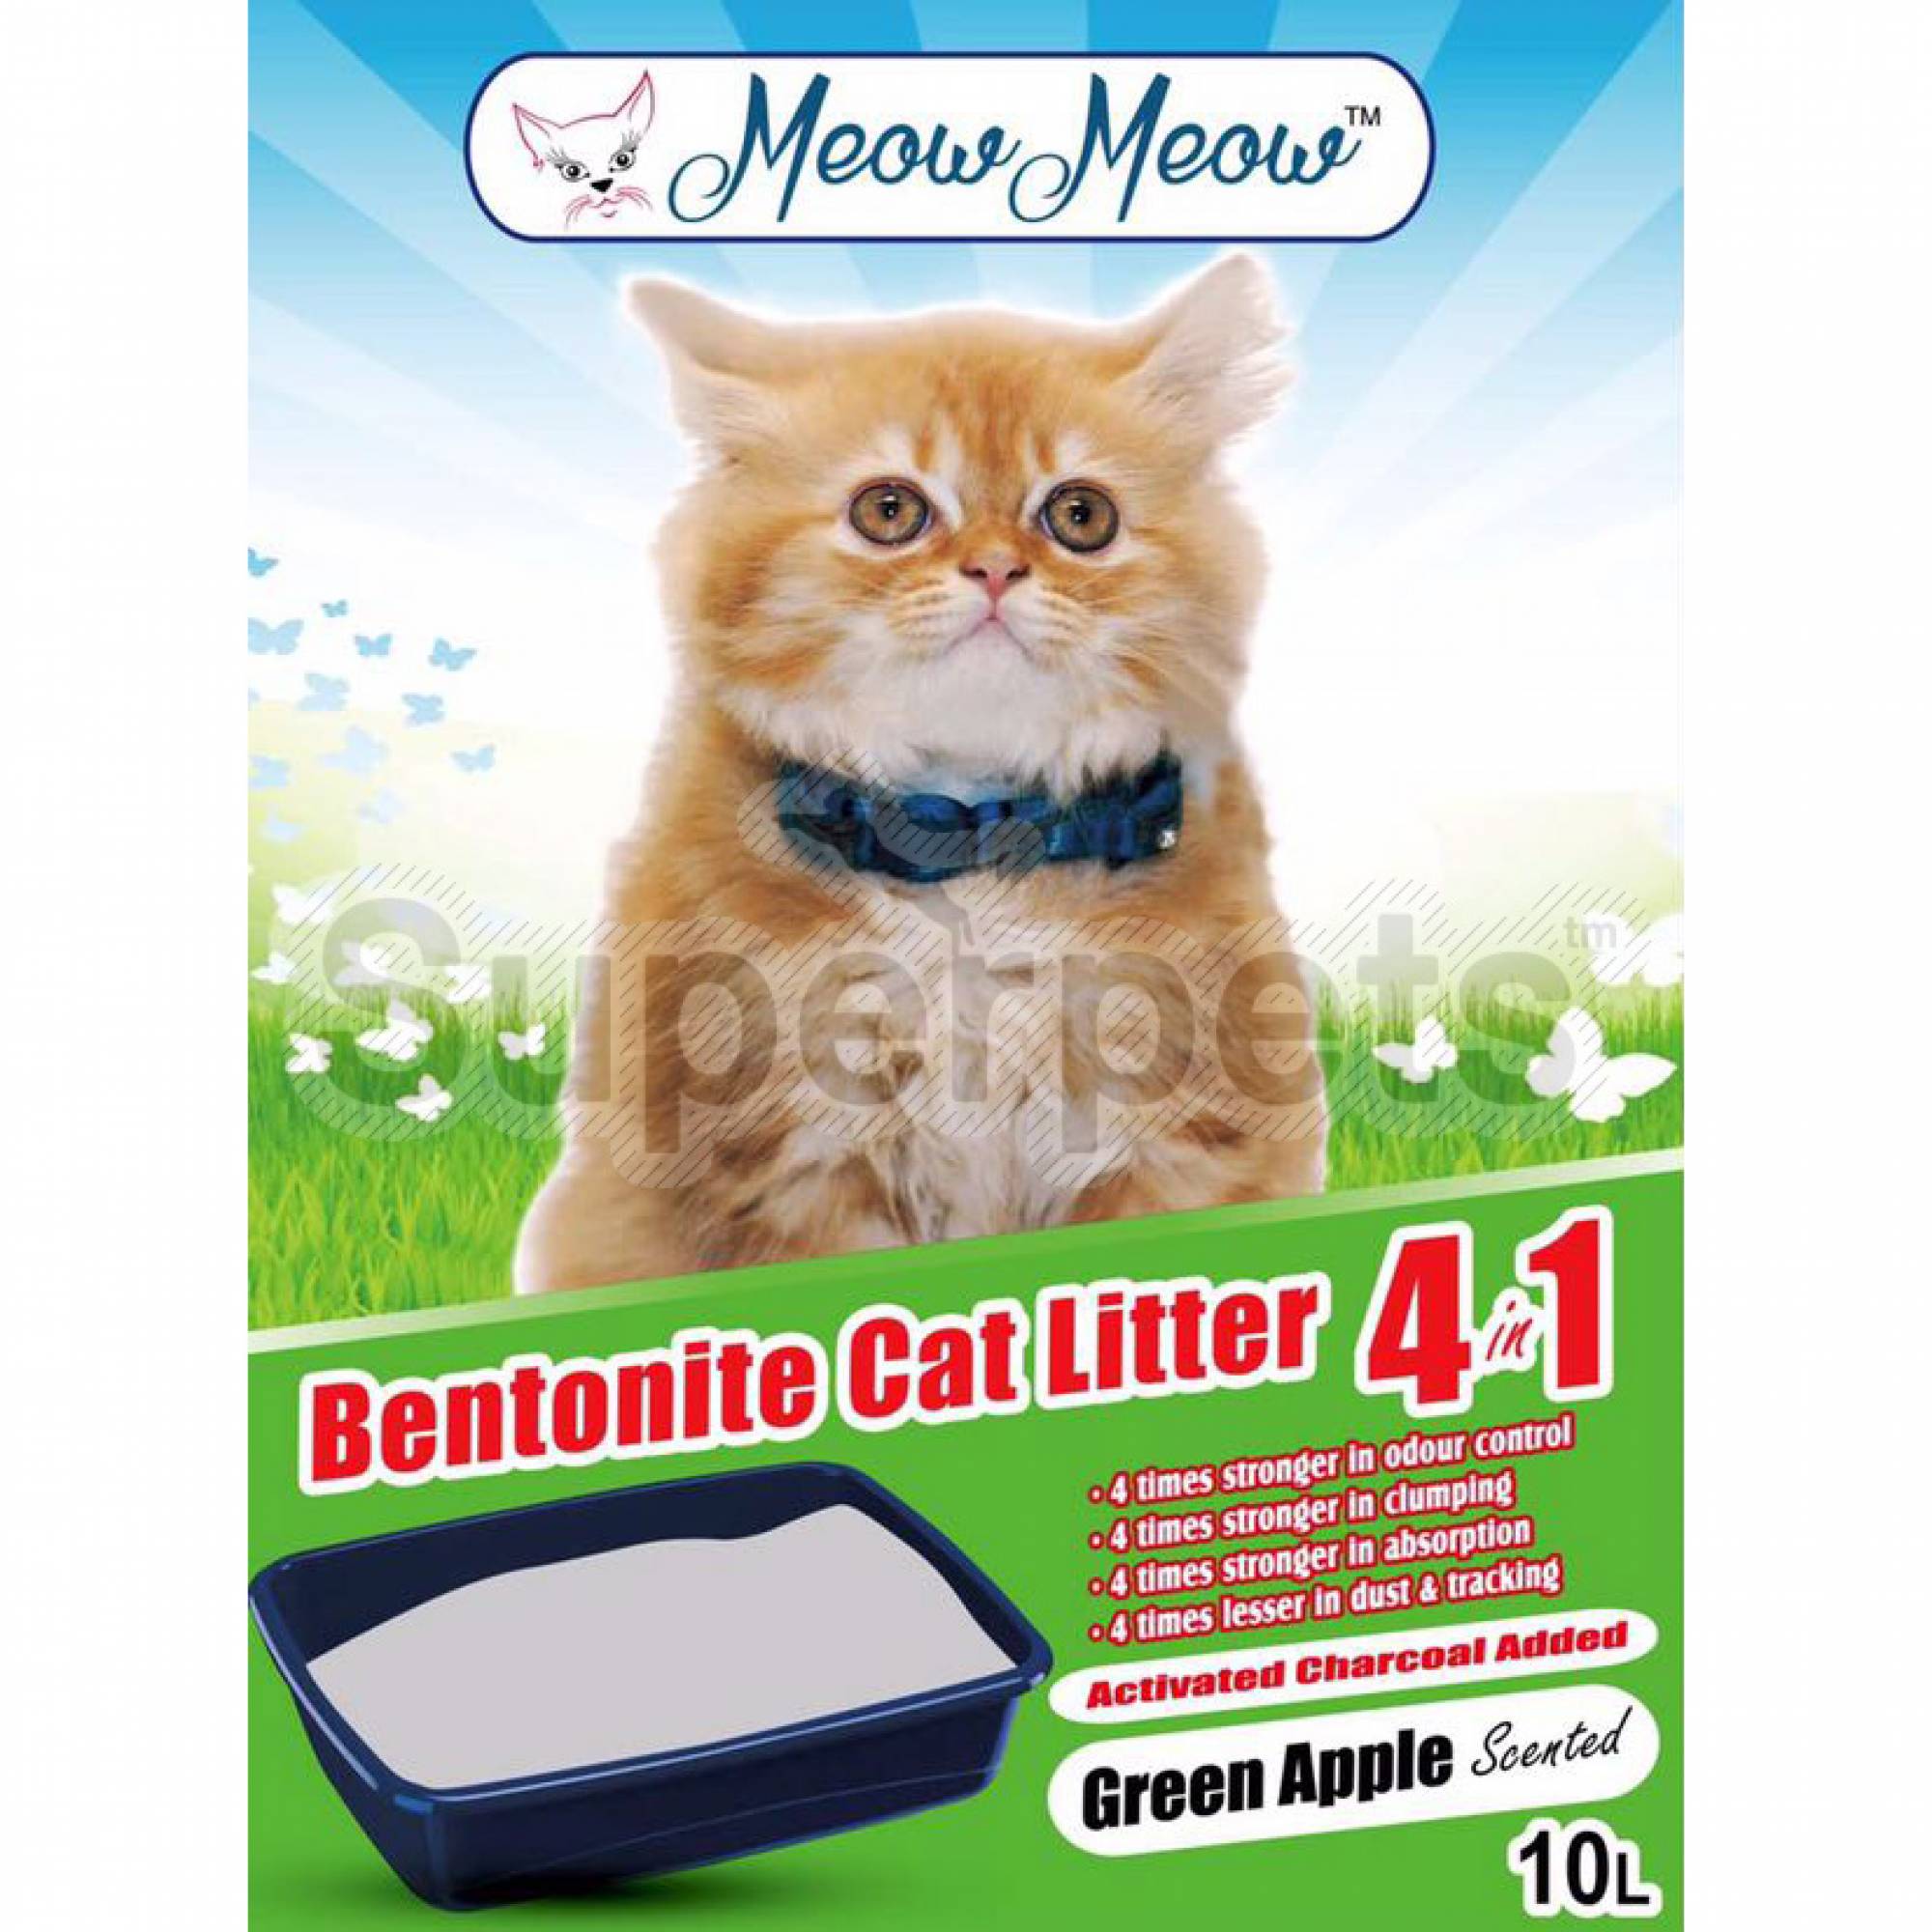 Meow Meow - Bentonite Cat litter 4-in-1 - Green Apple 10L